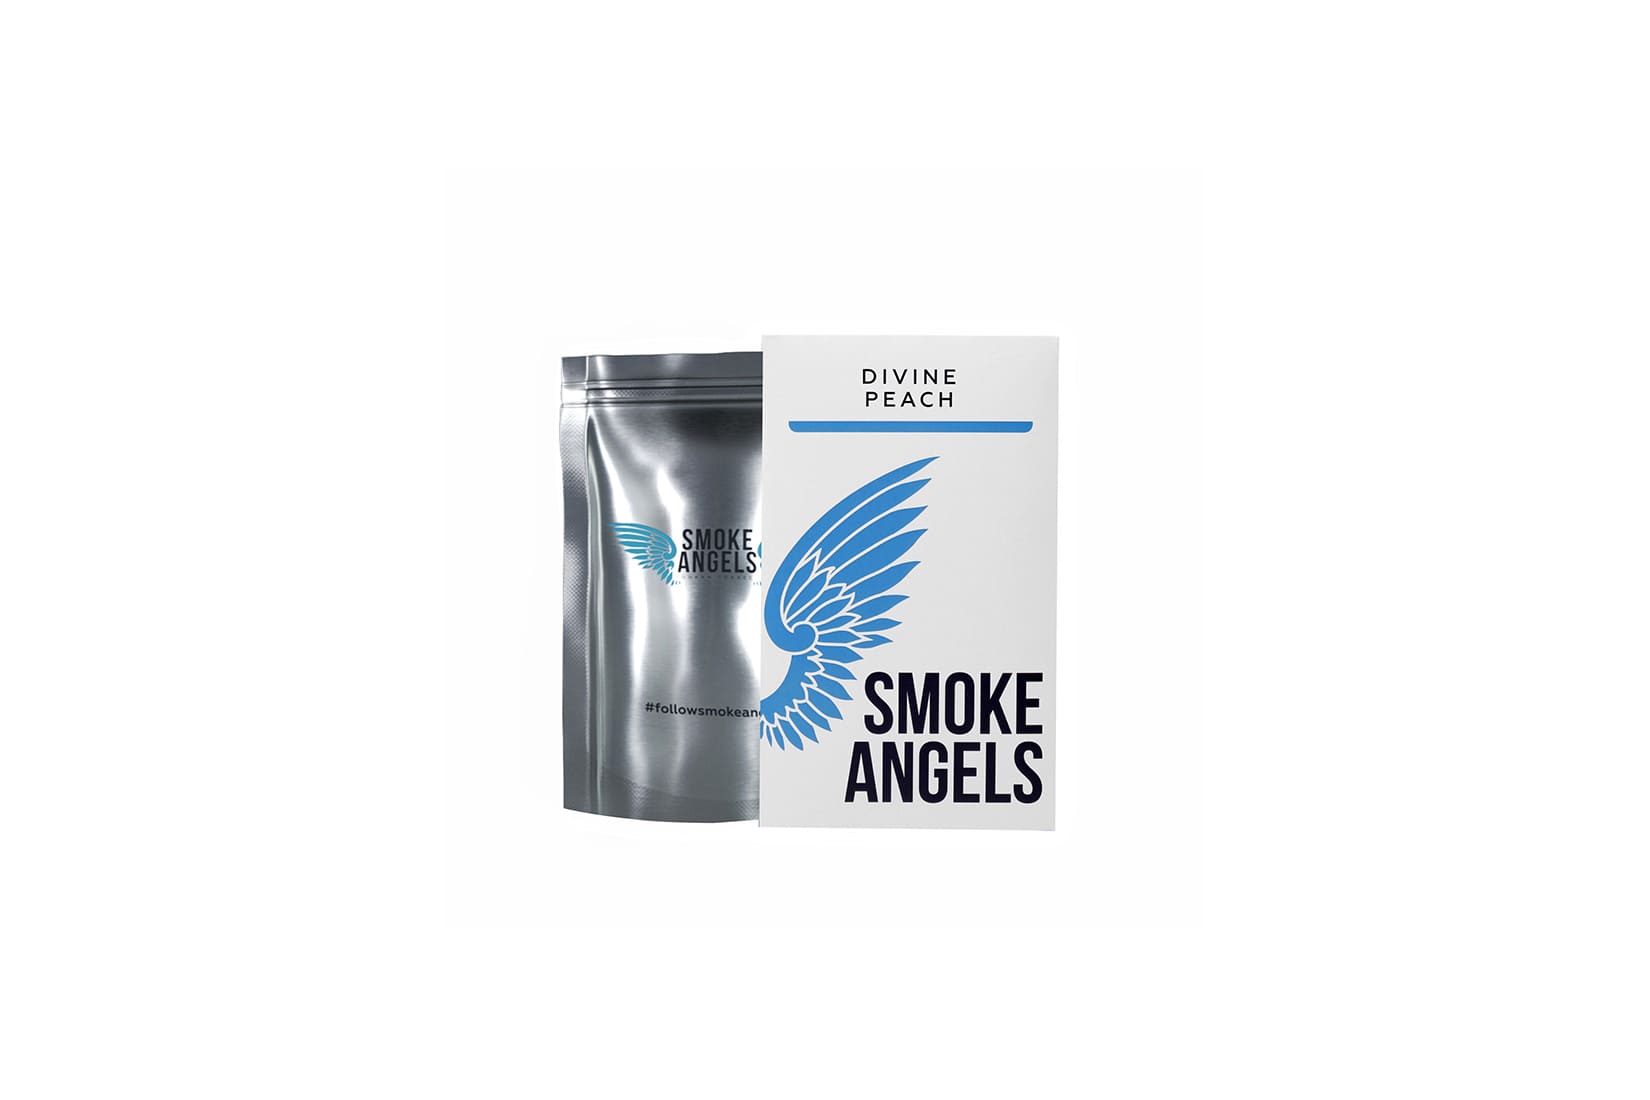 Табак для кальяна Smoke Angels DIVINE PEACH: описание, вкусы, миксы, отзывы